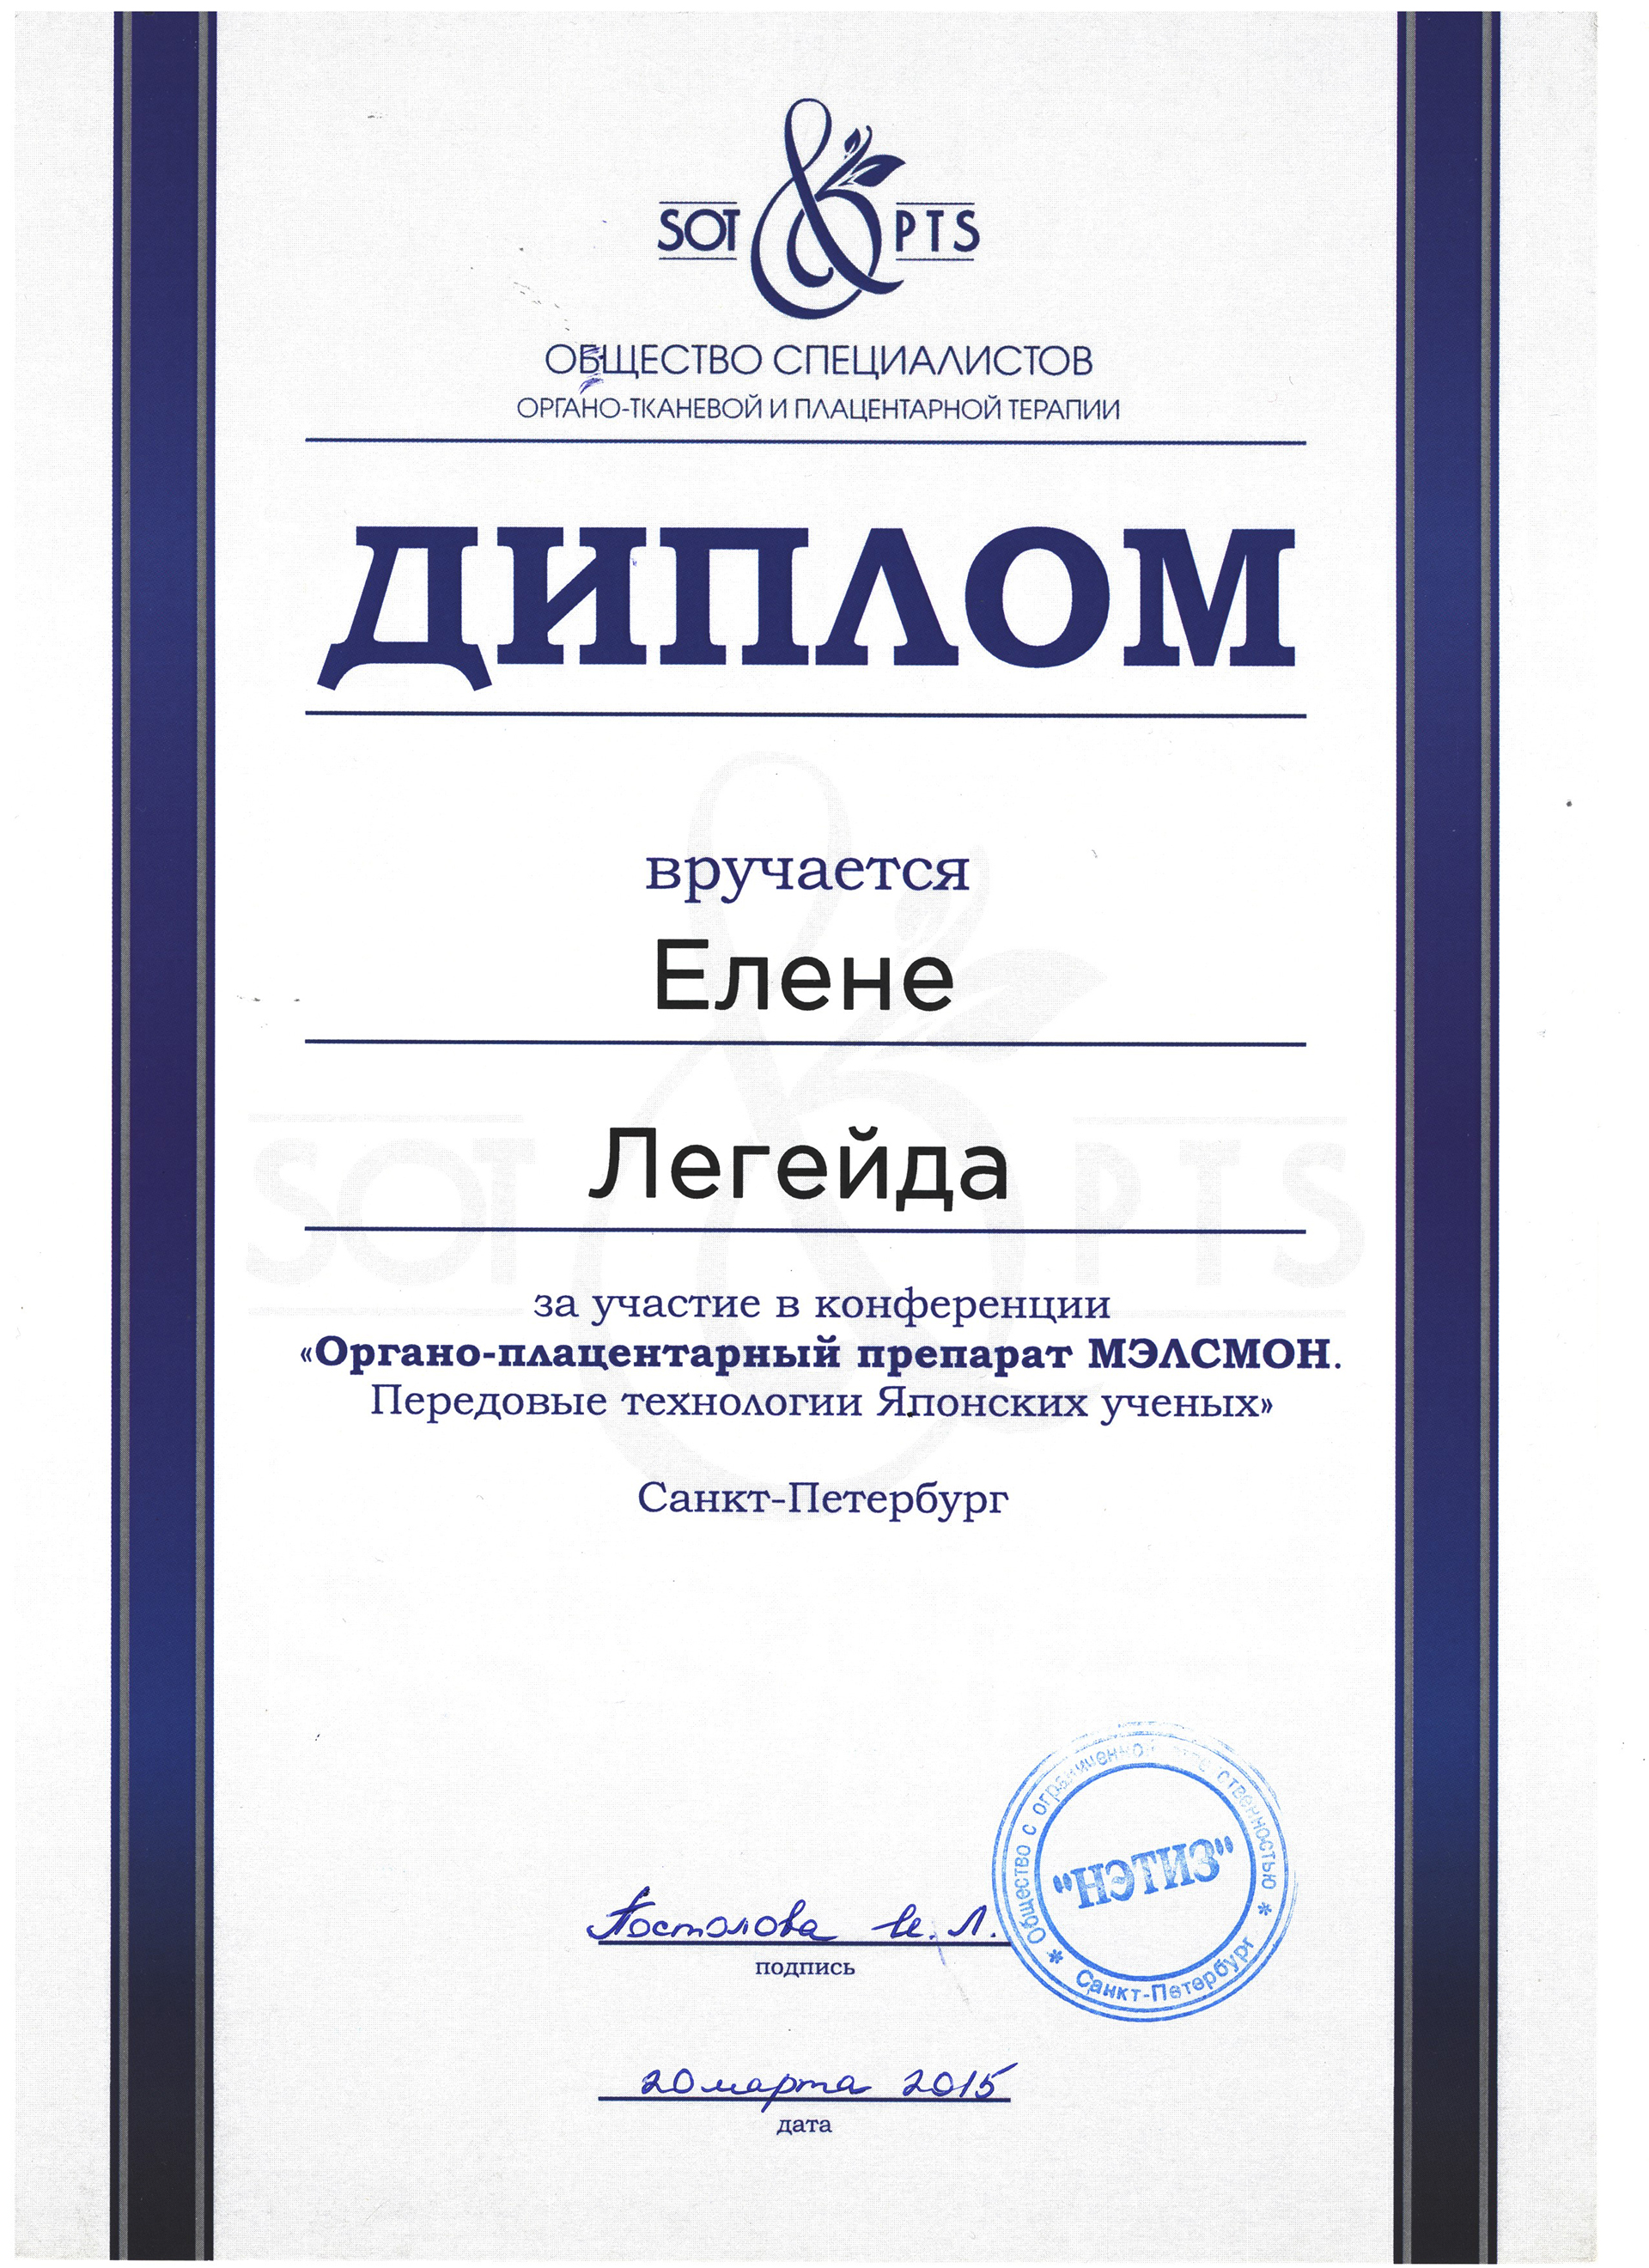 Сертификат — Конференция «Препарат Мэлсмон». Легейда Елена Валерьевна